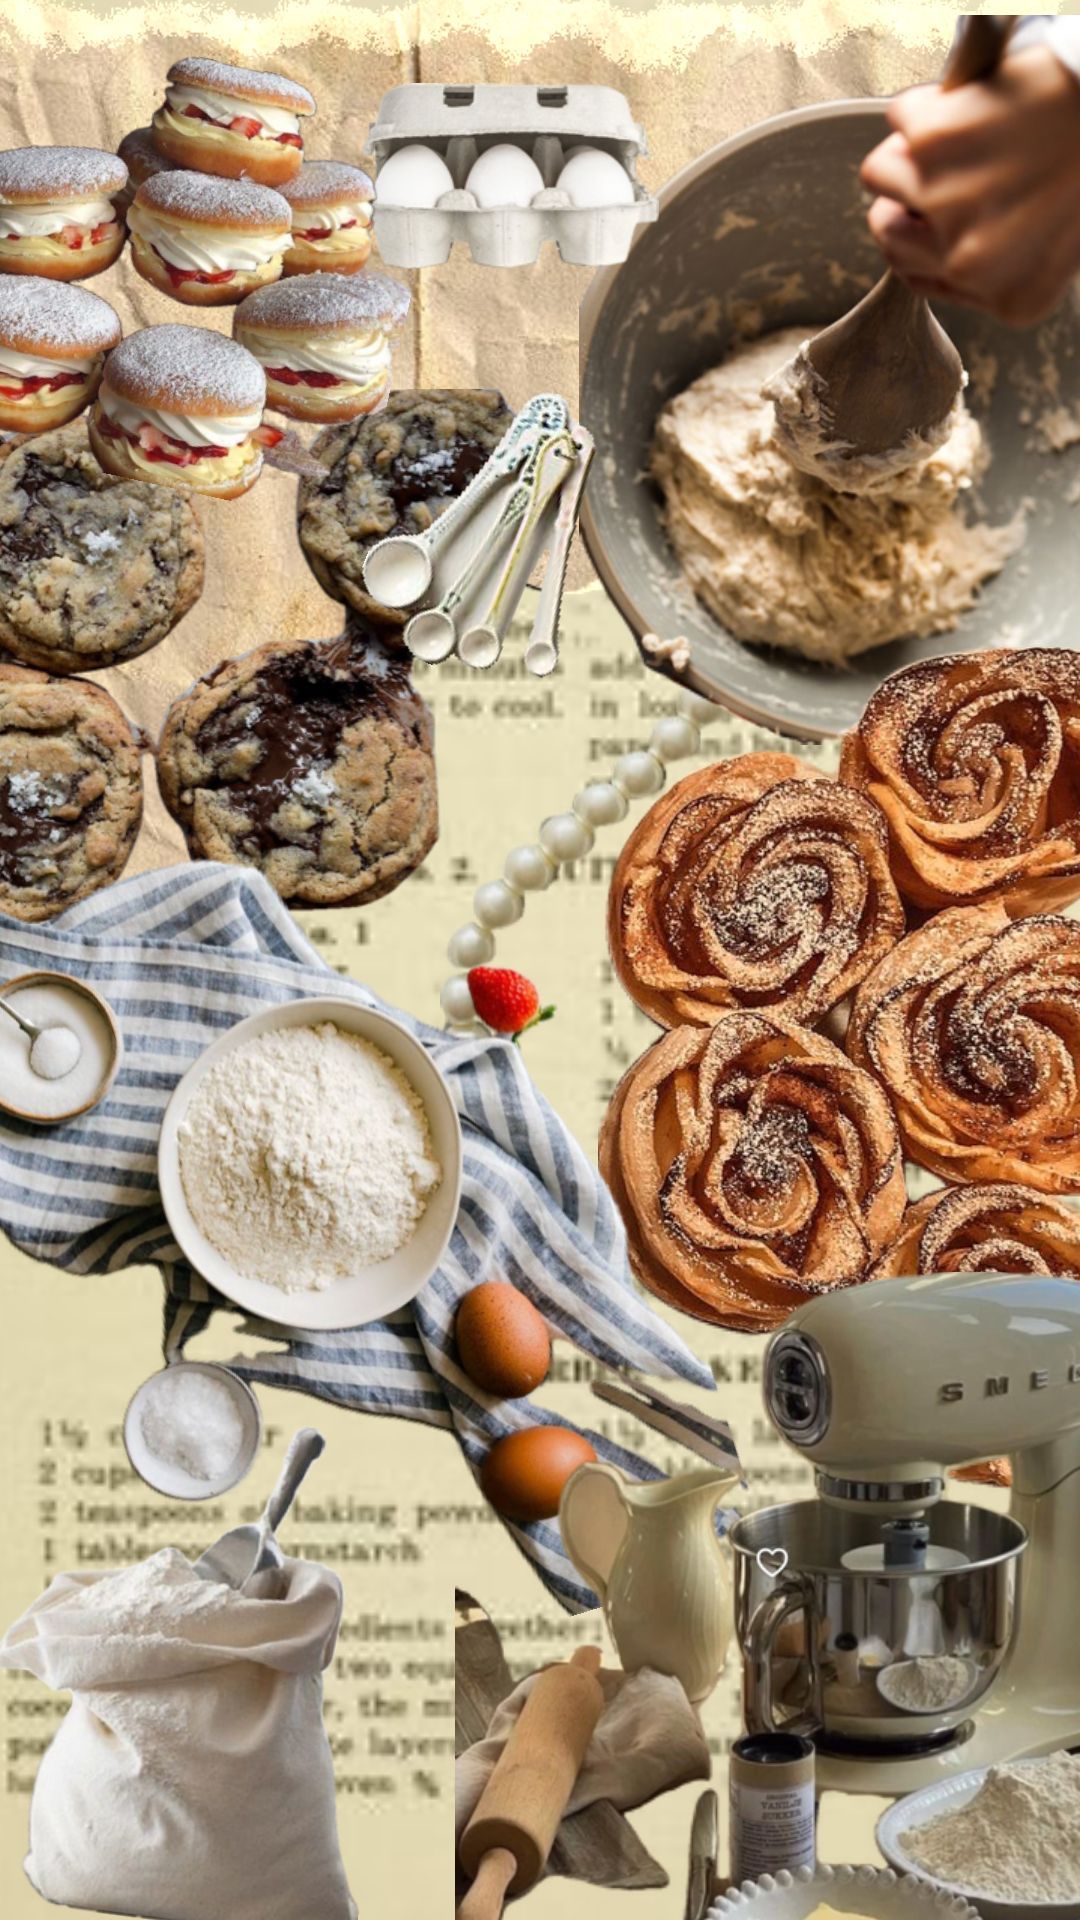 #baking #recipies #ingredients #hobby #food #pastries